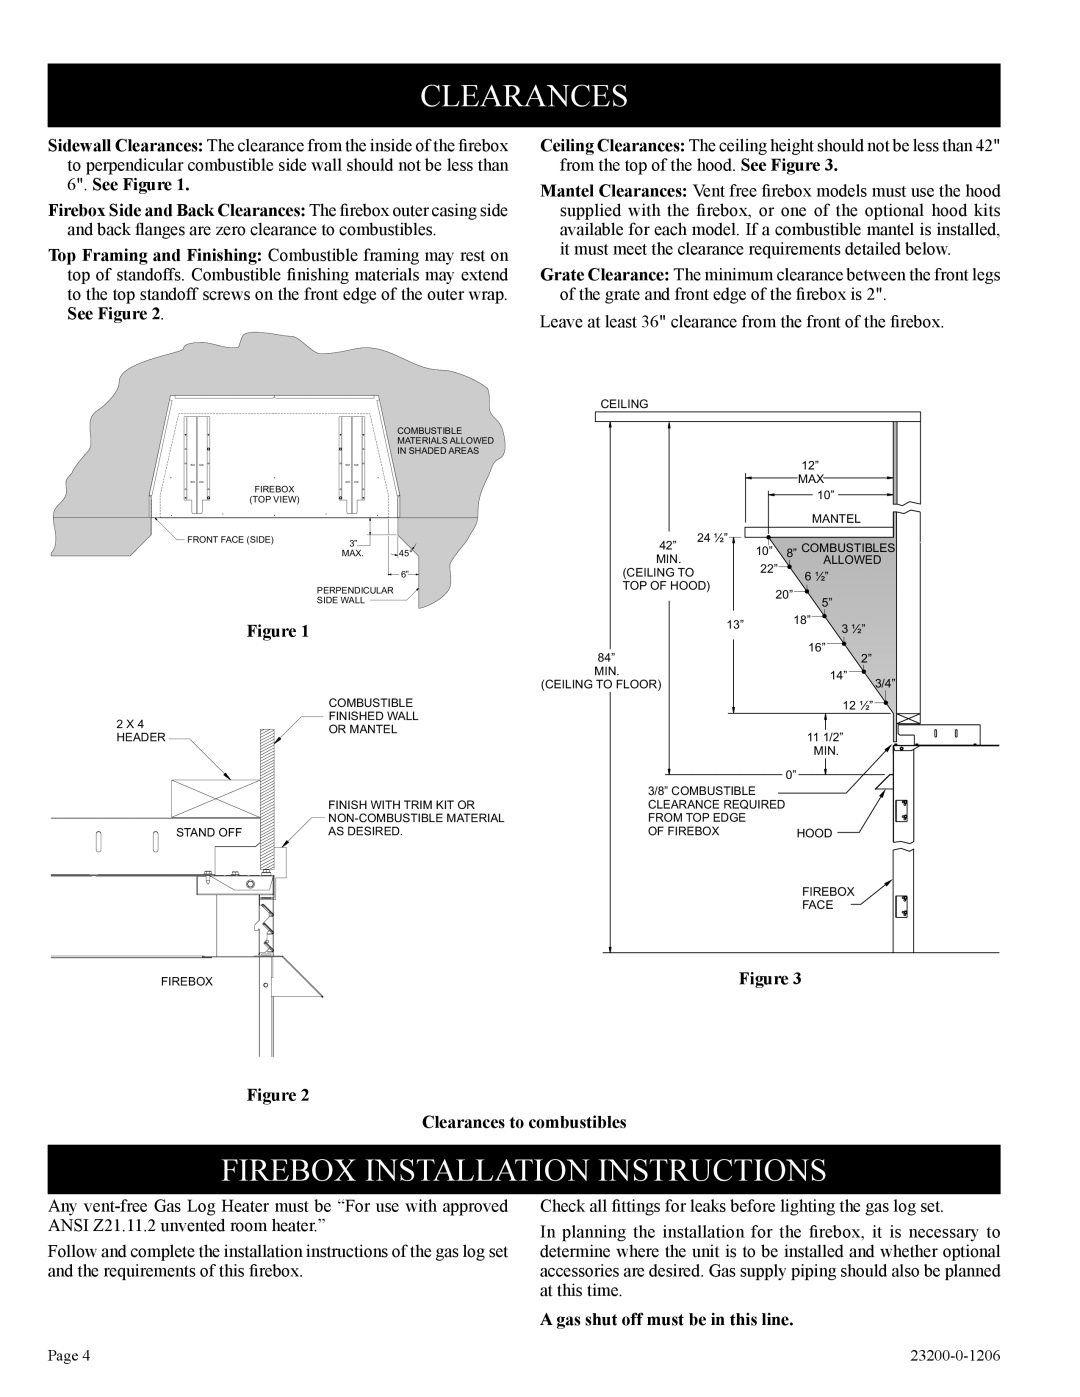 Empire Comfort Systems VFD32FB0F-1, VFD32FB2DL-1 Firebox Installation Instructions, Figure Clearances to combustibles 